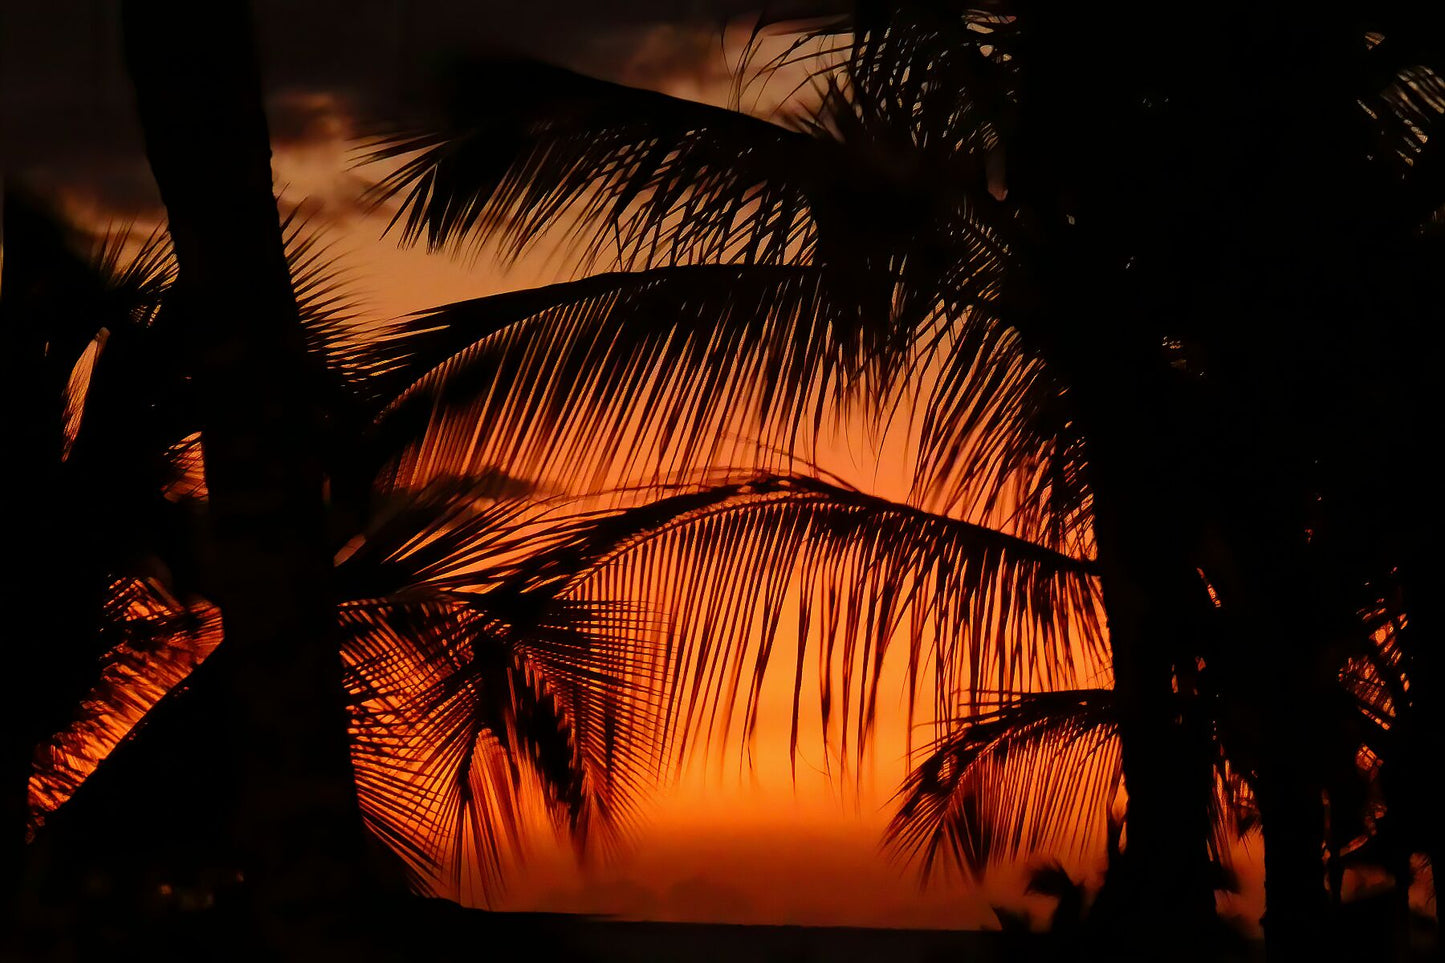 Palm Trees shadows with orange sky